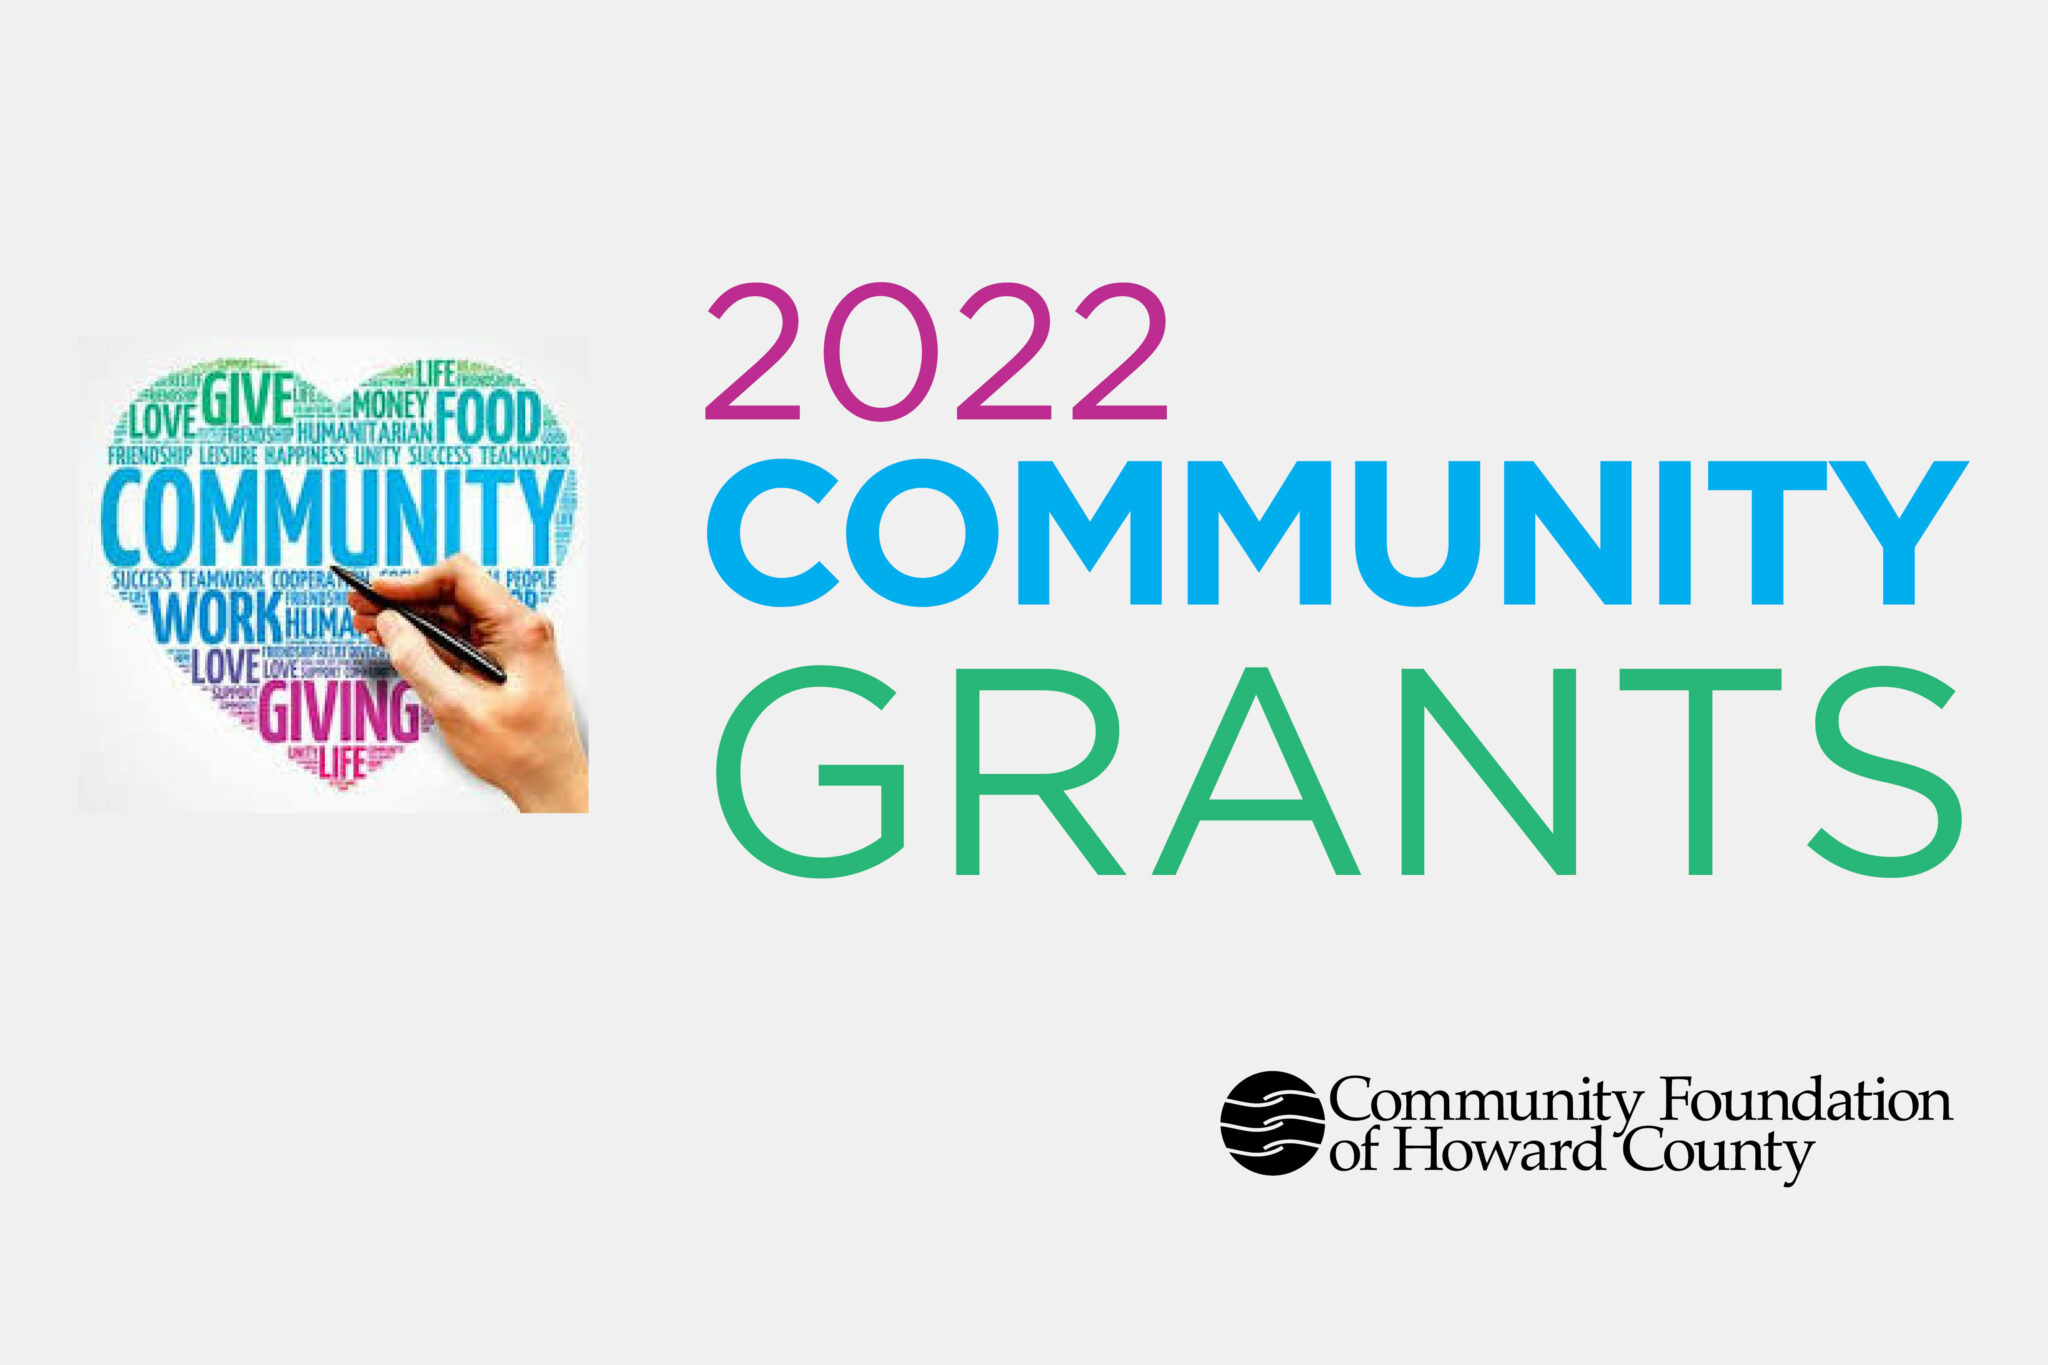 CFHoCo Announces 2022 Community Grant Awards Community Foundation of